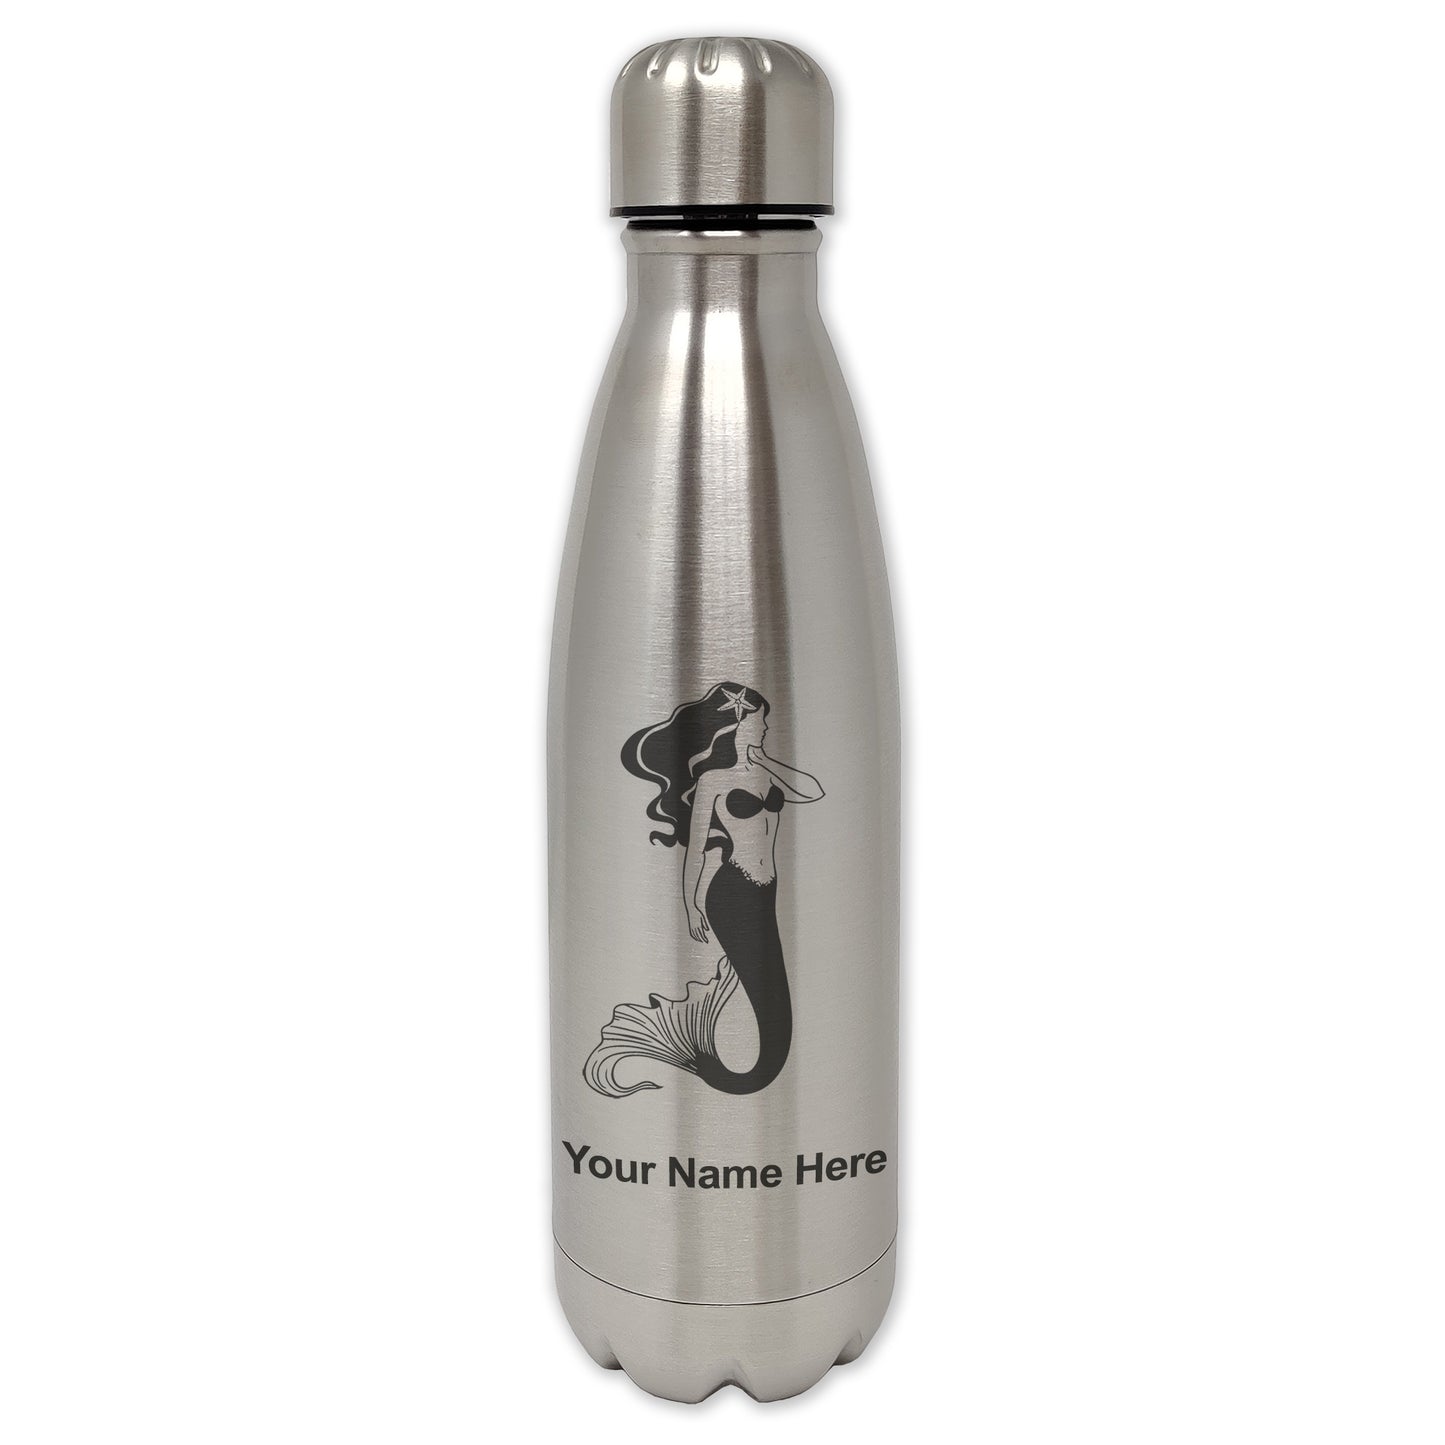 LaserGram Single Wall Water Bottle, Mermaid, Personalized Engraving Included